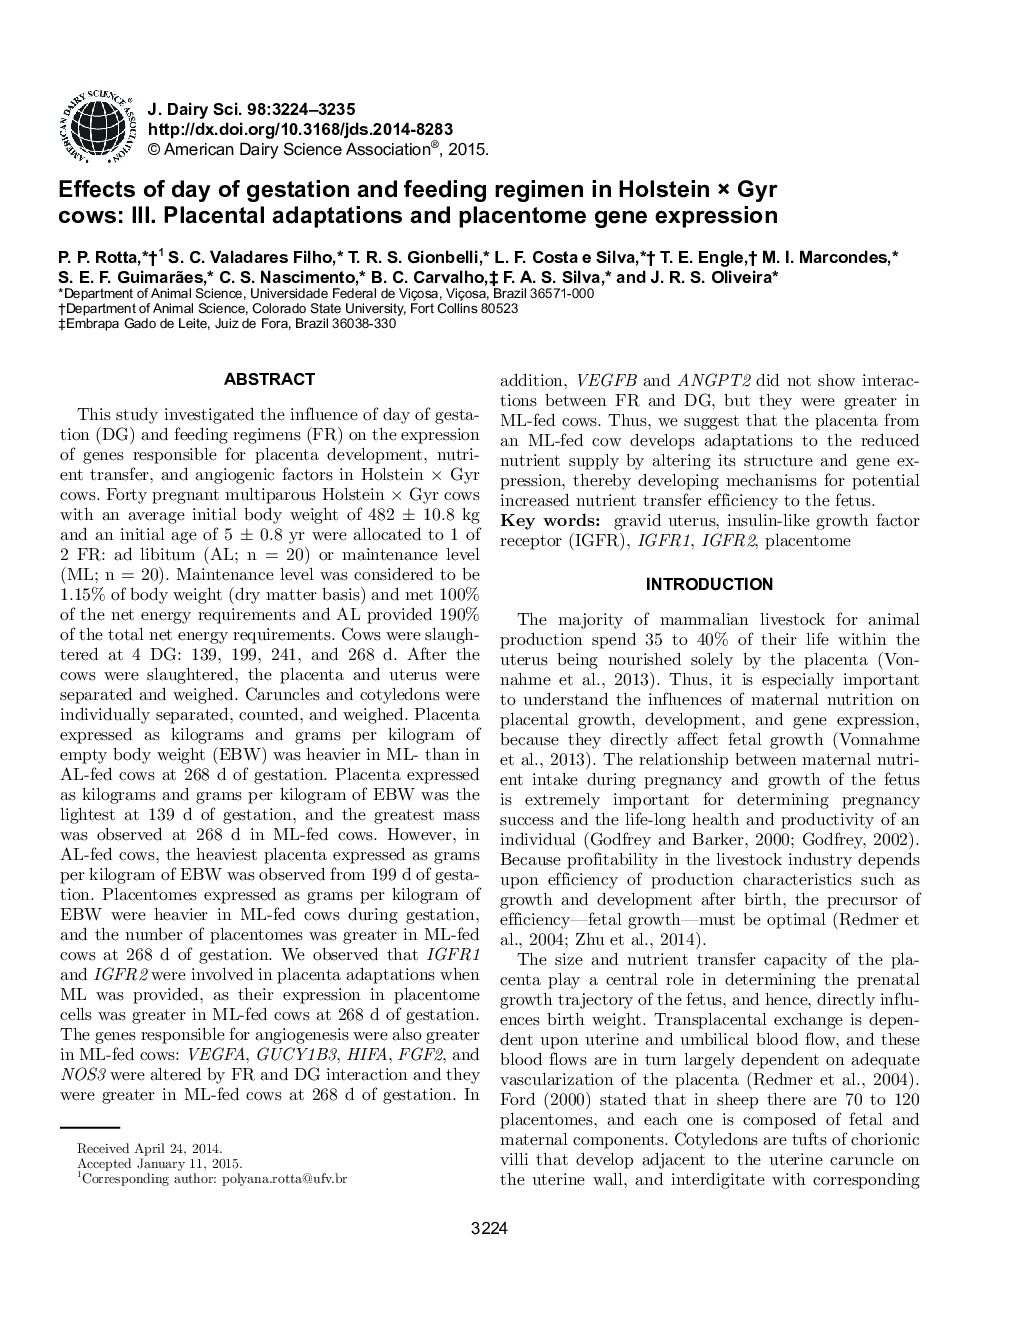 Effects of day of gestation and feeding regimen in Holstein Ã Gyr cows: III. Placental adaptations and placentome gene expression